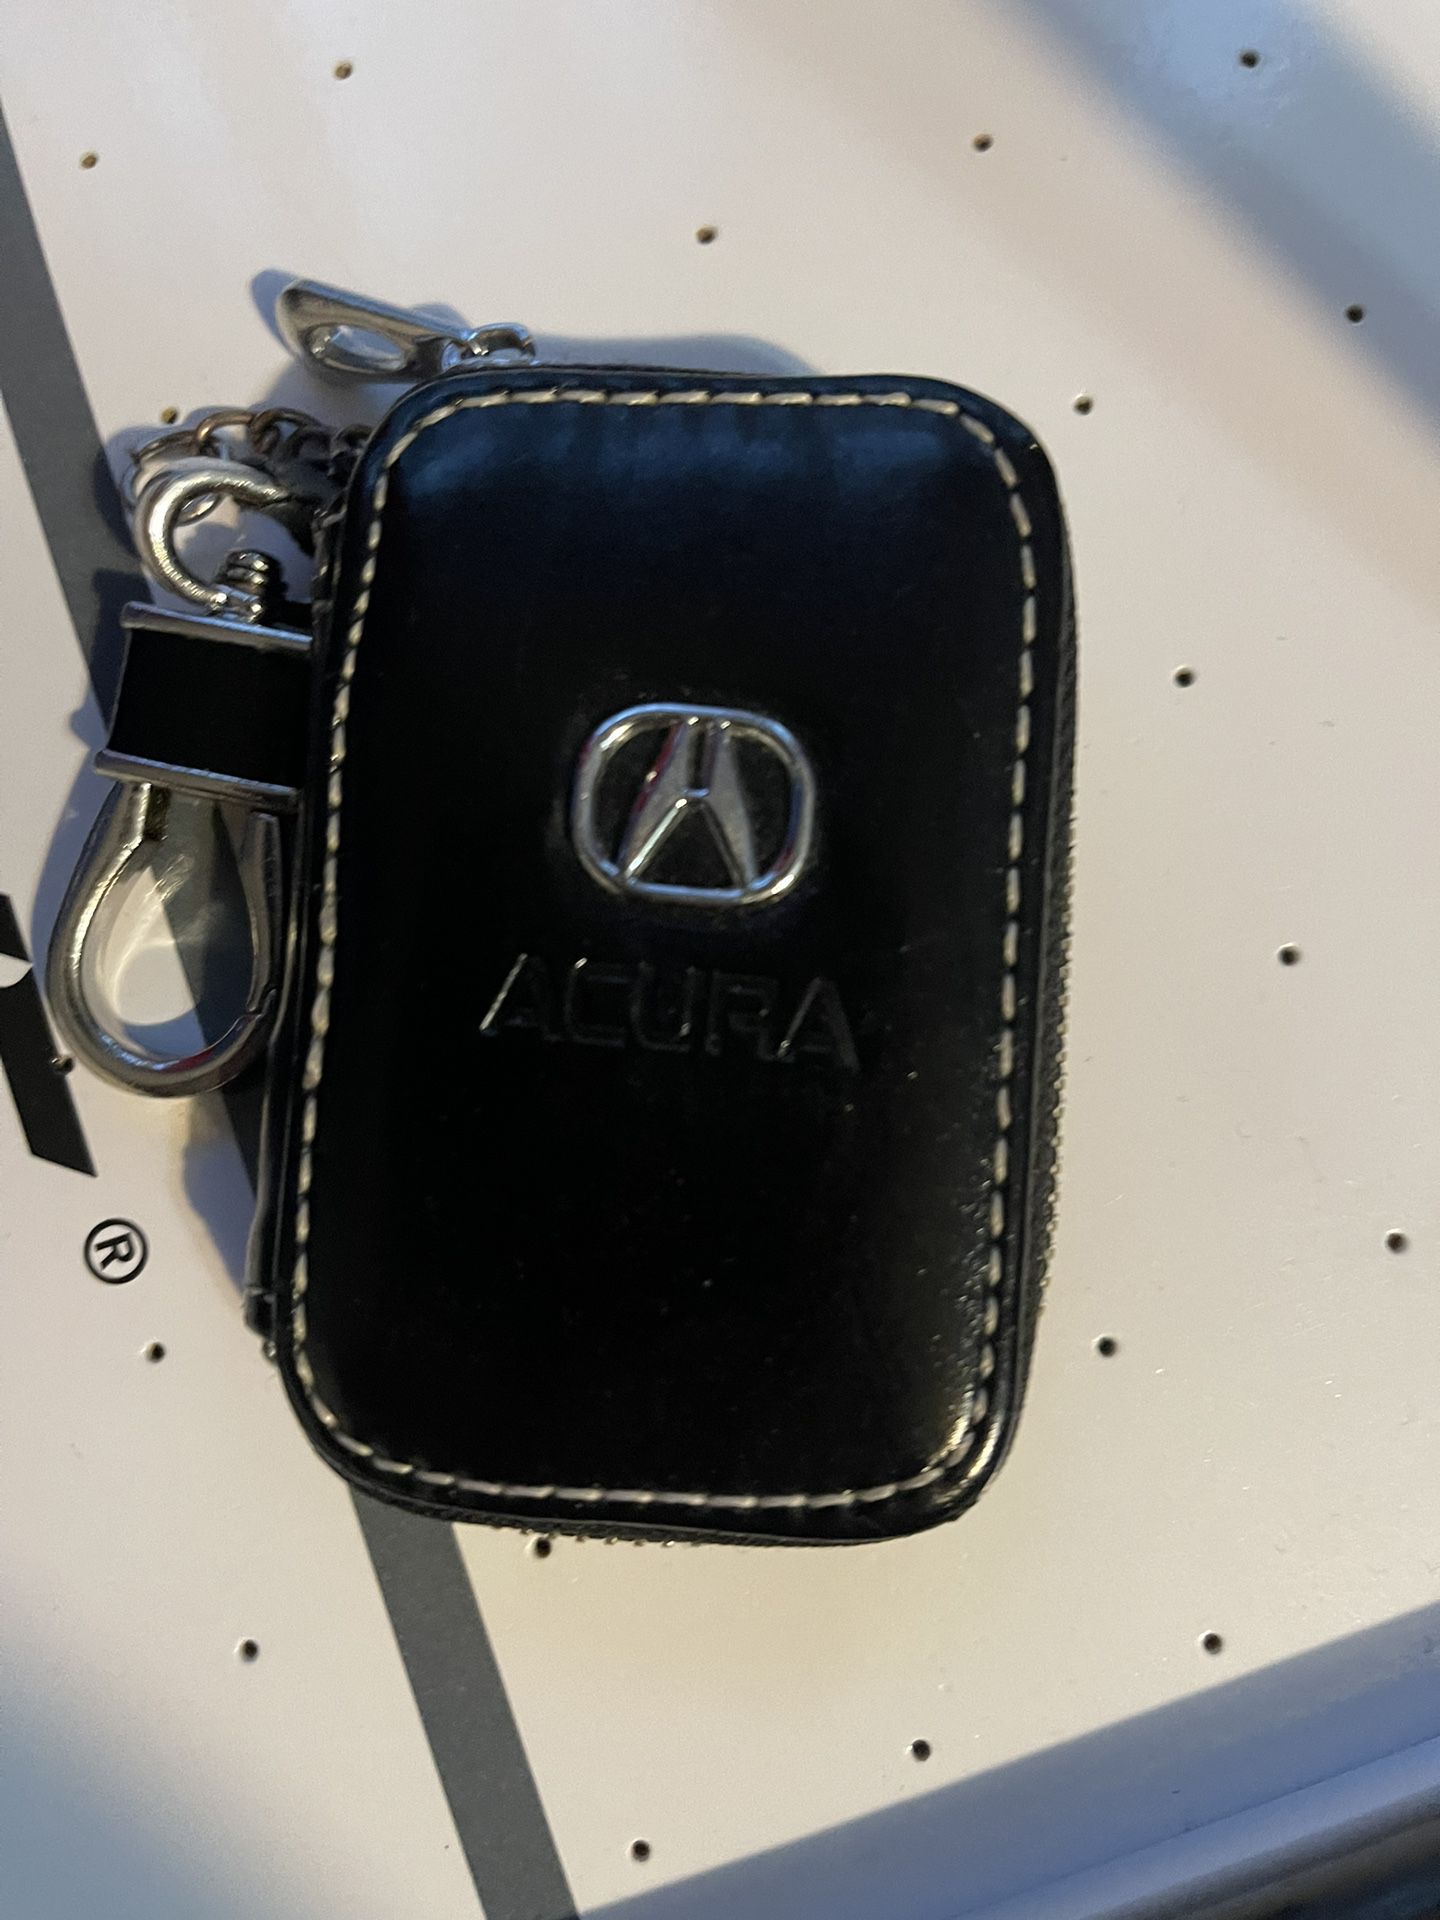 Leather Acura key holder